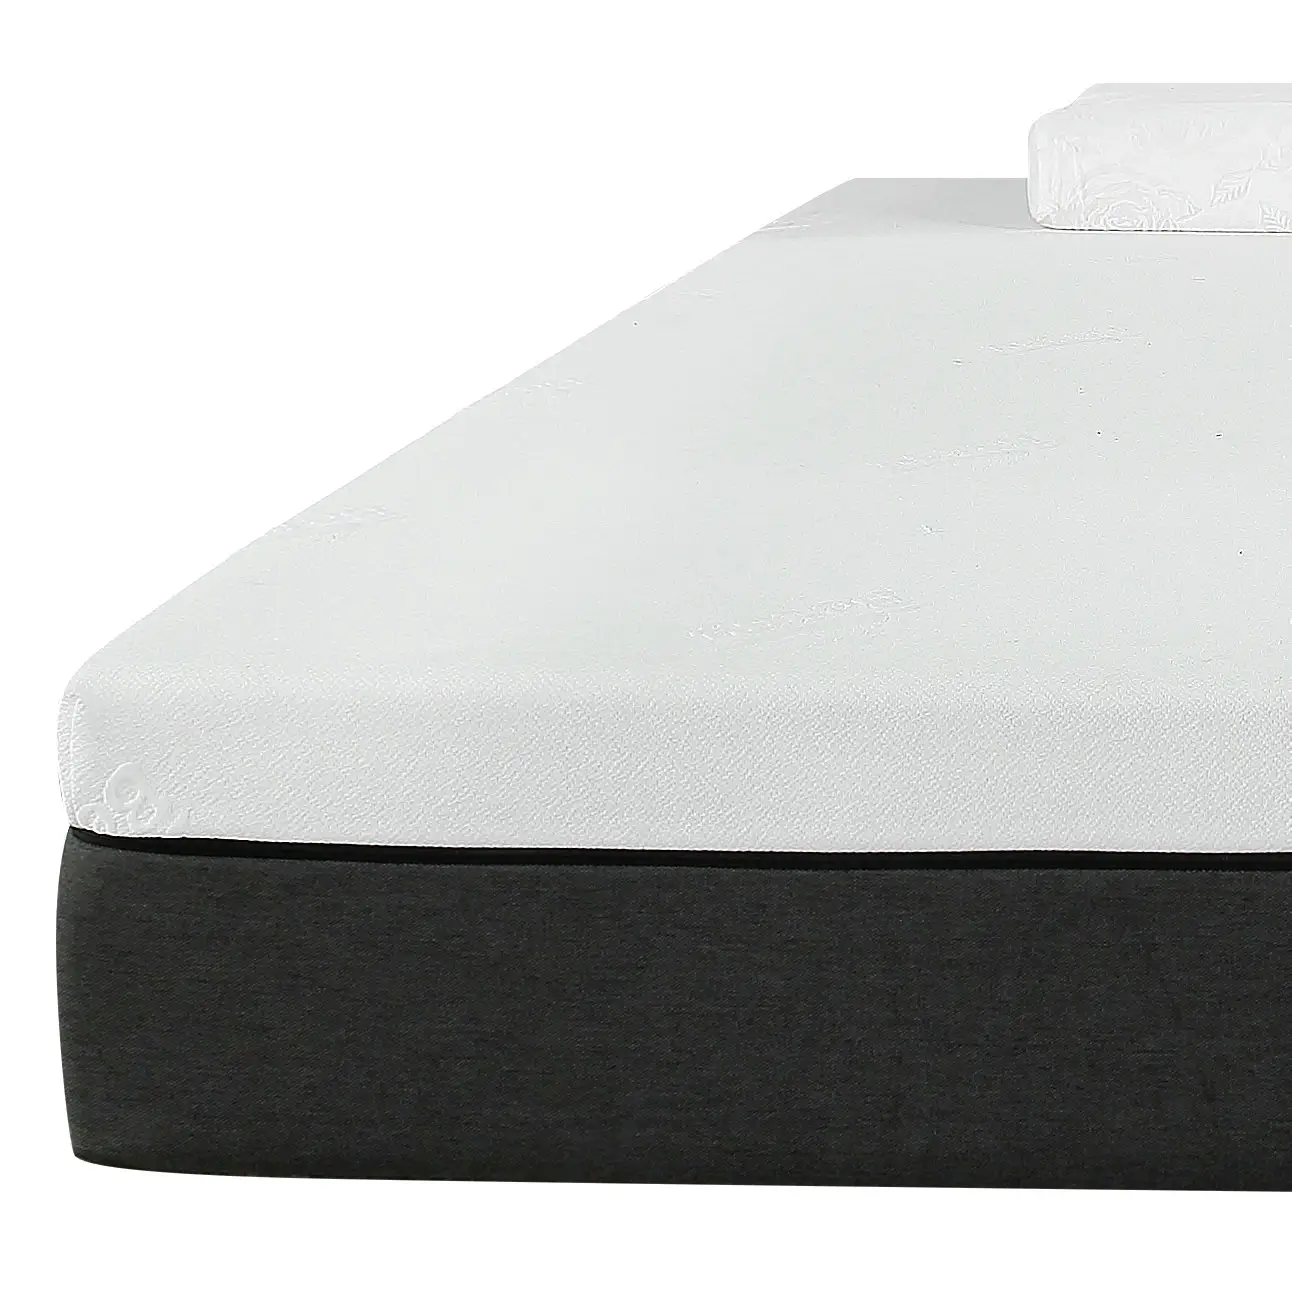 Latex Memory Foam Matratze in einer Box